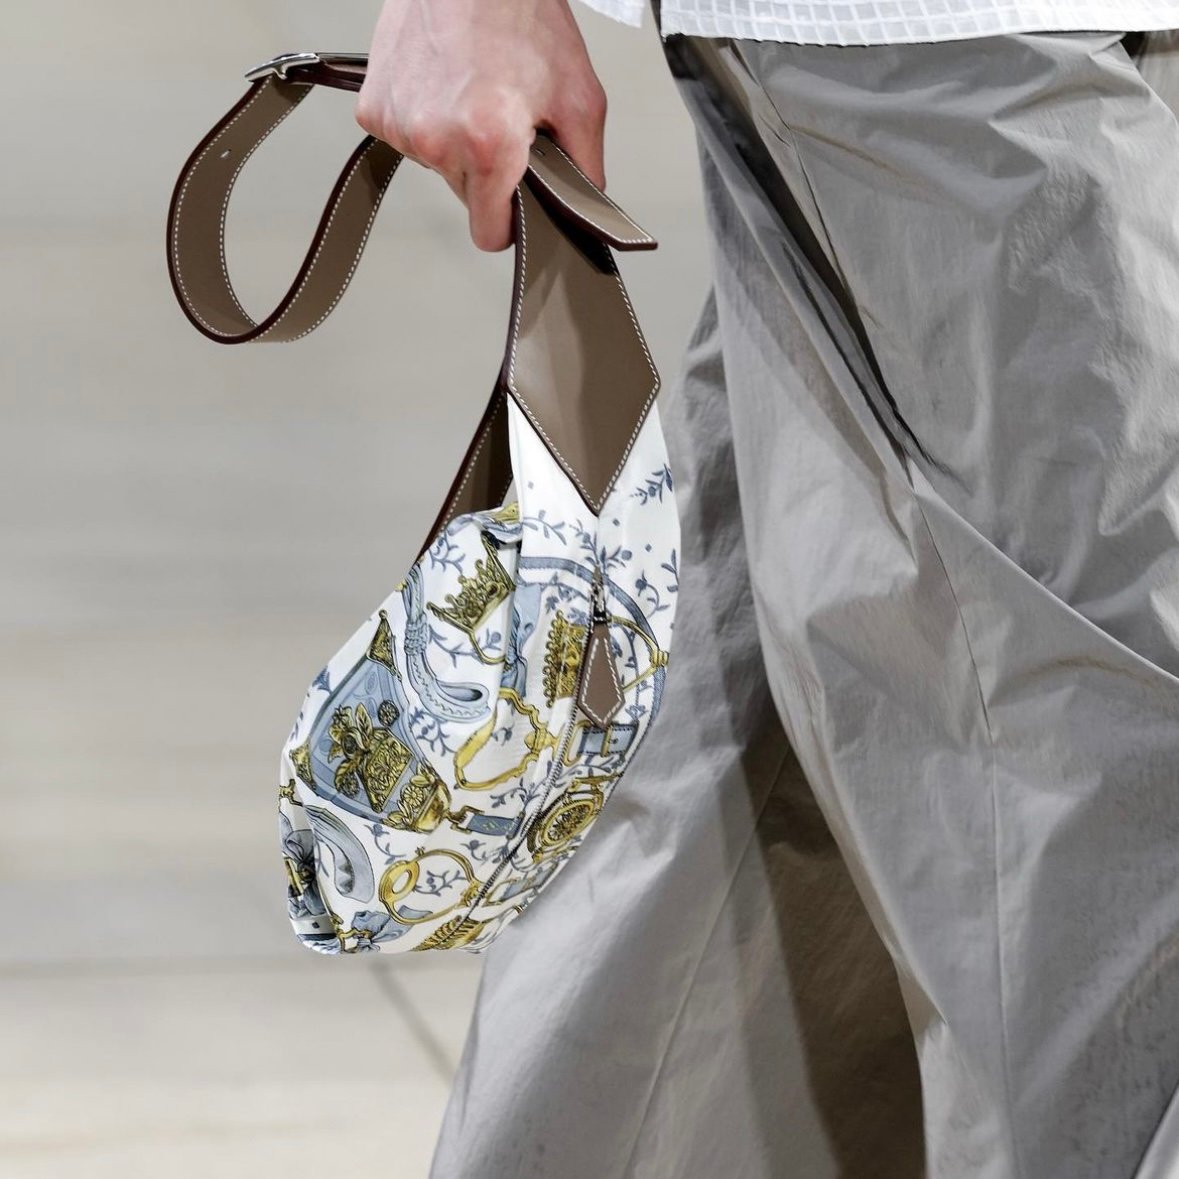 Hermès men's birkin bag Spring/Summer 2013